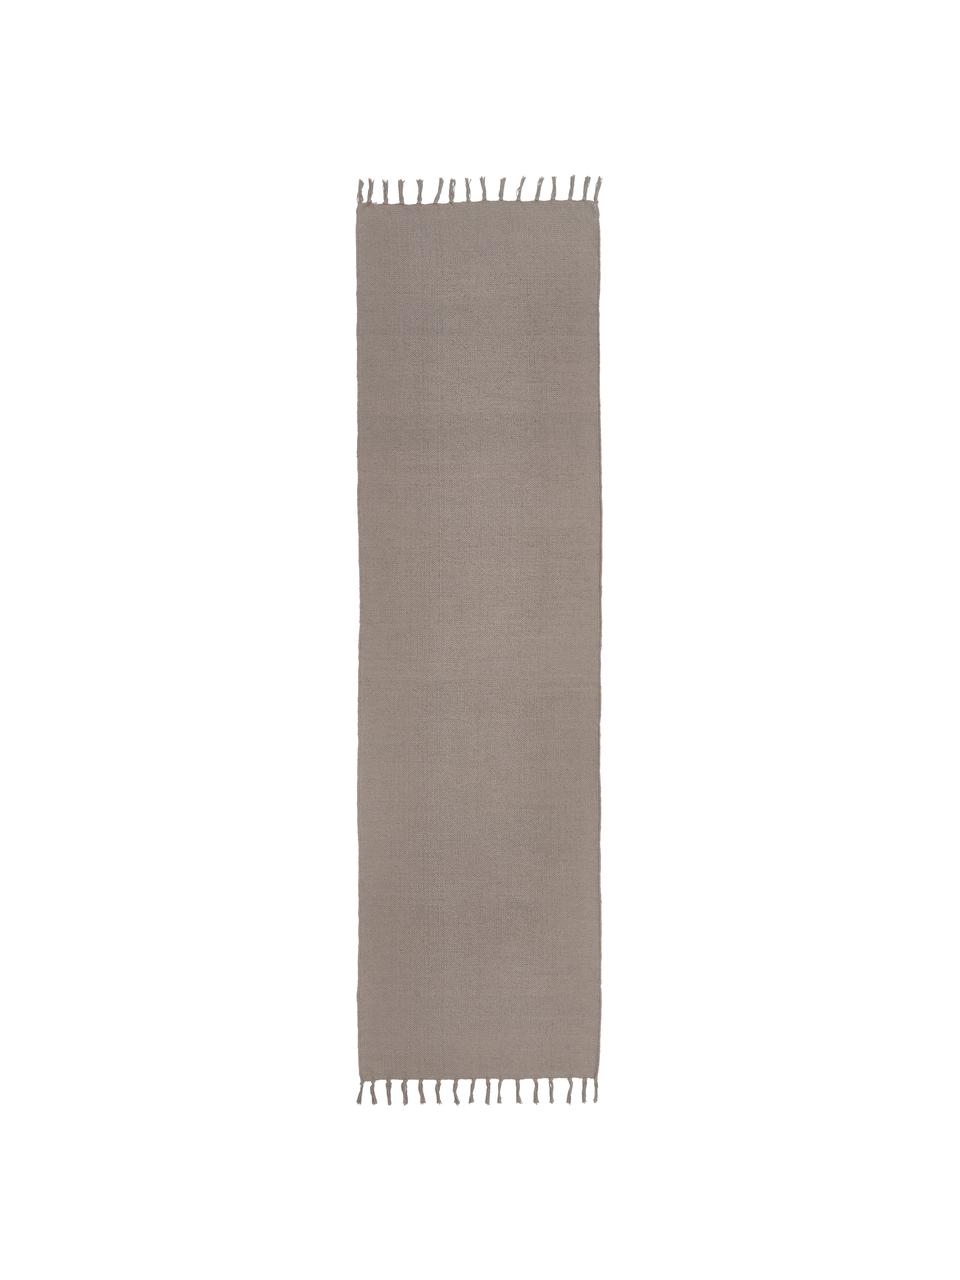 Dunne katoenen loper Agneta in grijs, handgeweven, 100% katoen, Grijs, 70 x 250 cm